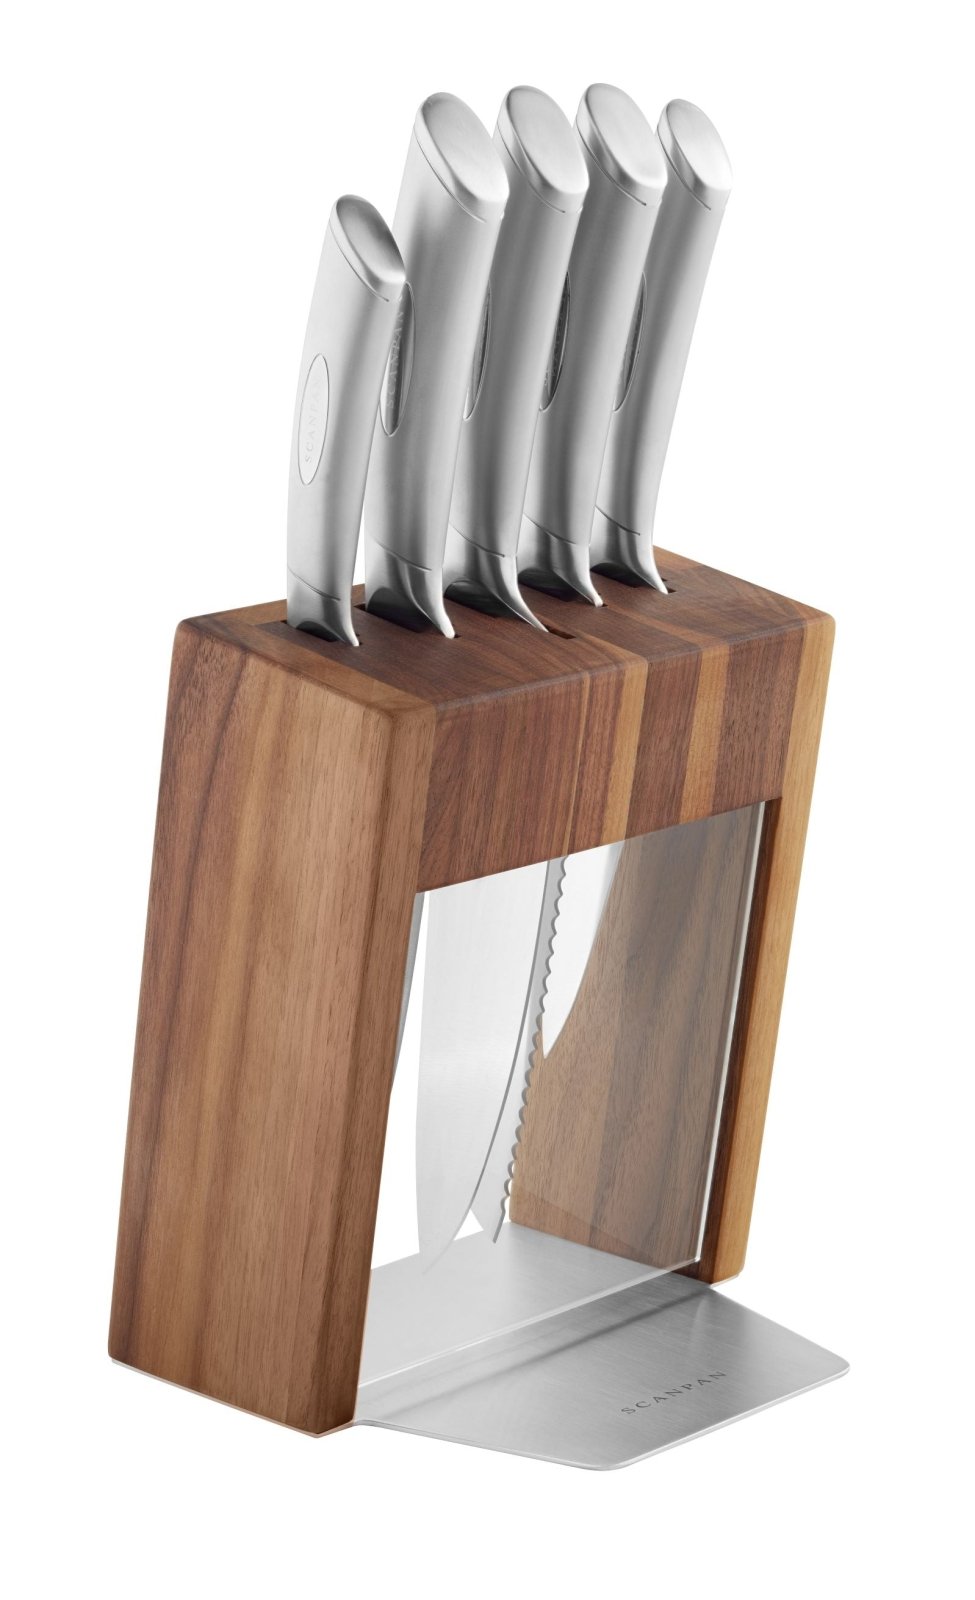 Scanpan Classic Steel 6pc Knife Block Set - SP9001060600 - The Cotswold Knife Company